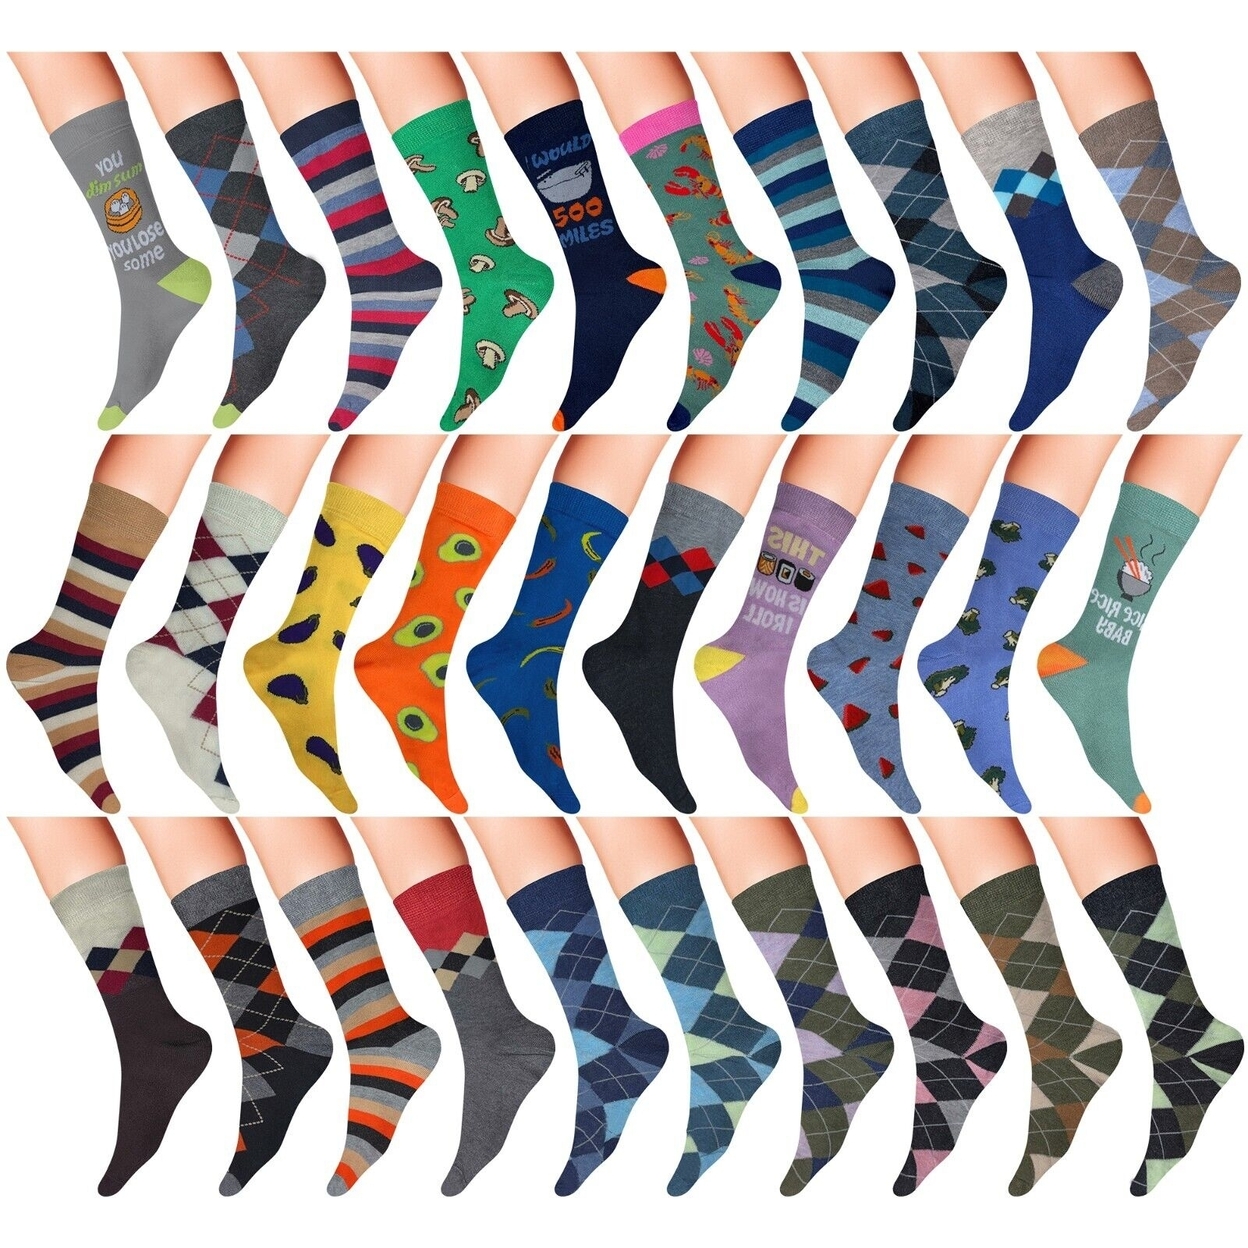 12-Pairs: Men's James Fiallo Premium Quality Fun Printed Dress Socks - Polka Dots